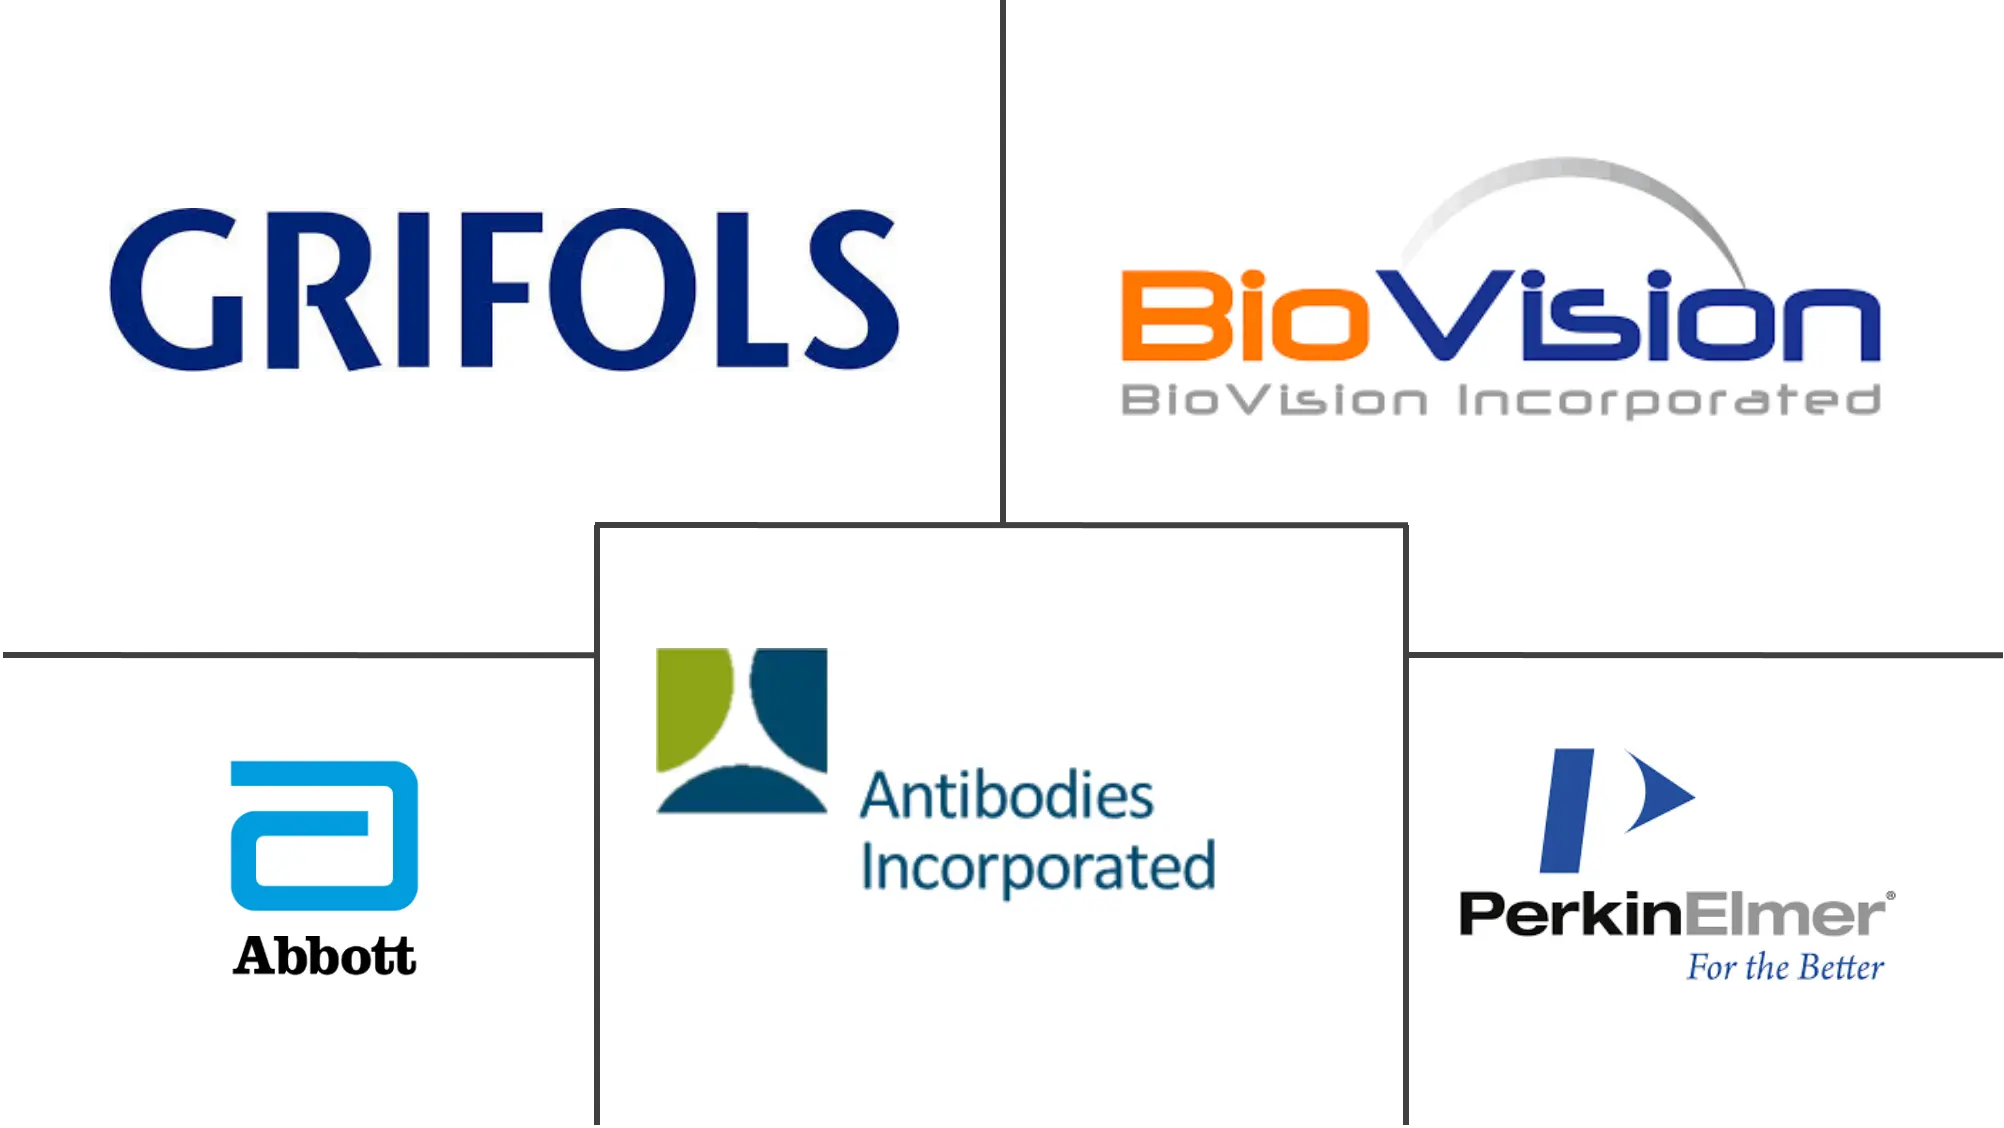 anti-nuclear antibody testing market major players